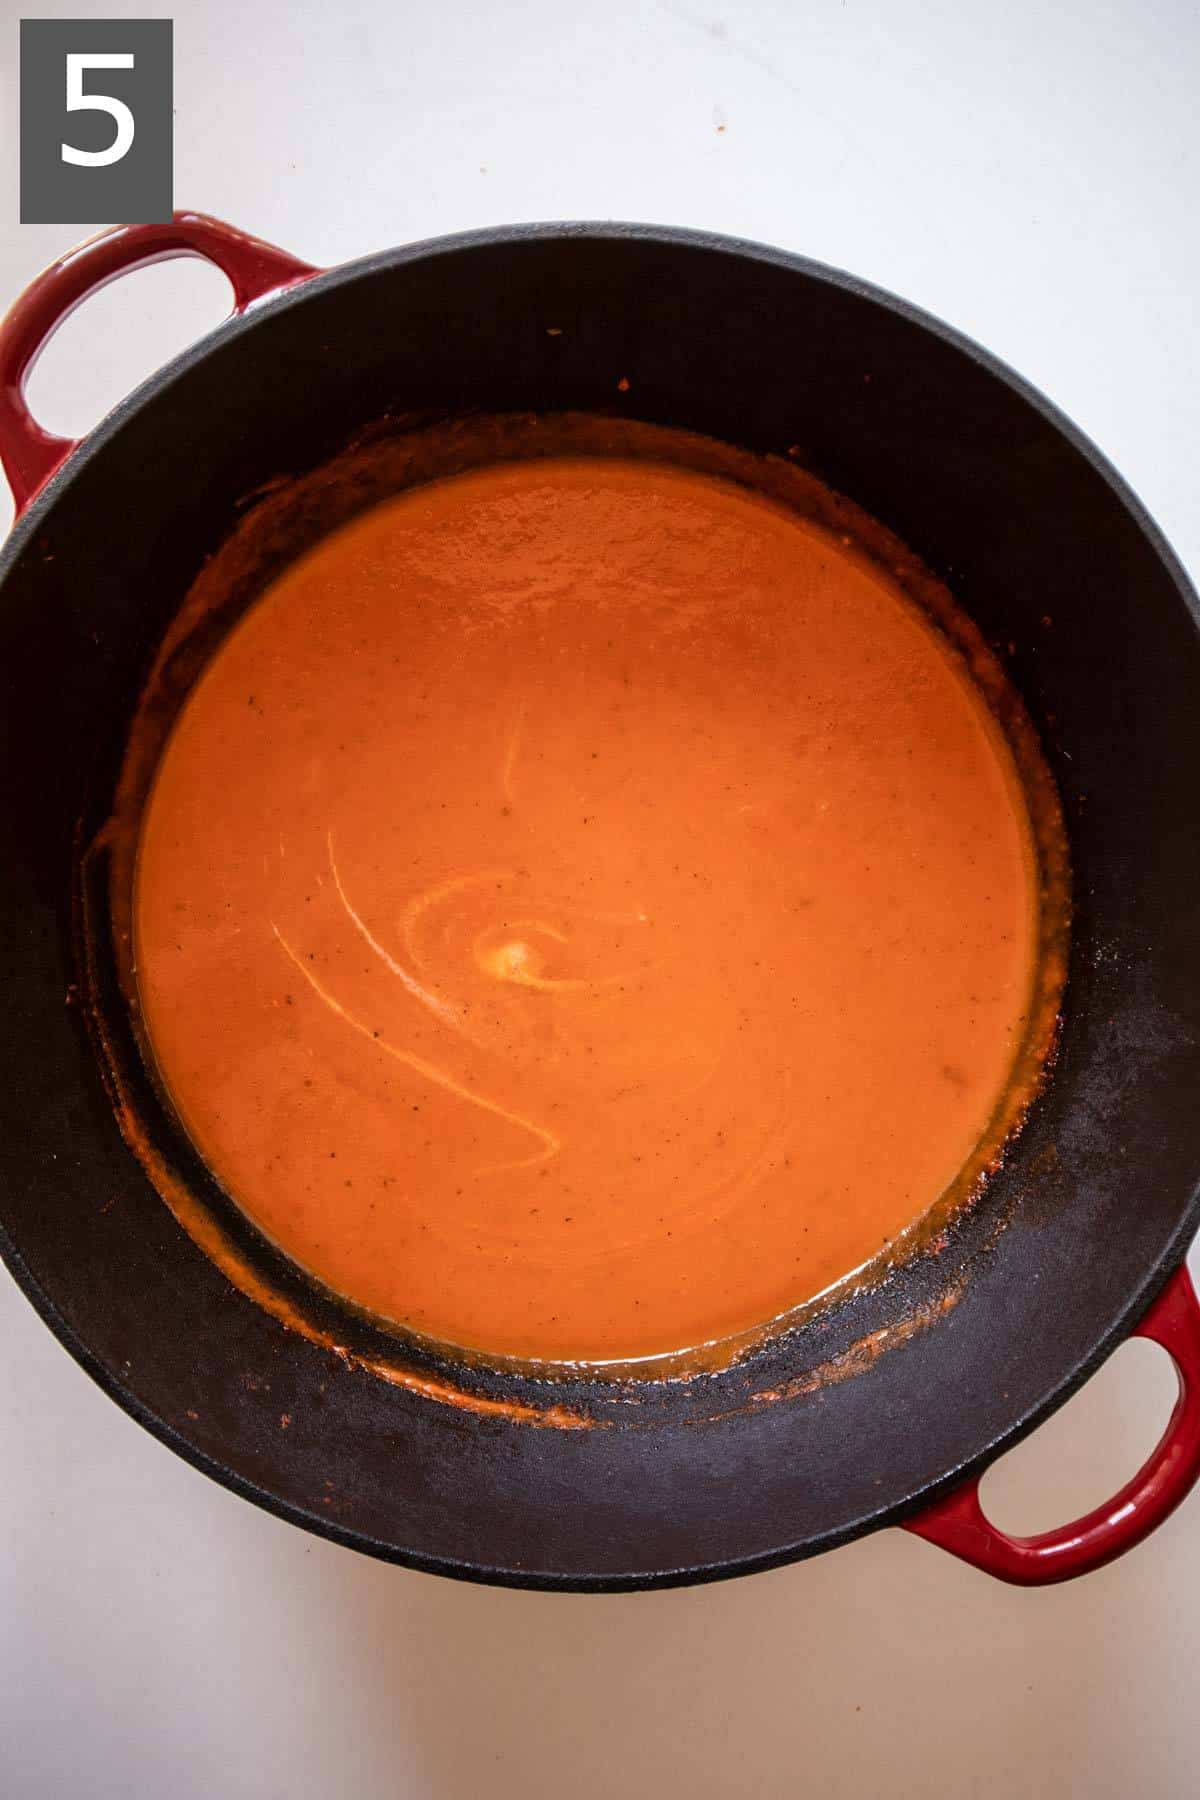 Blended tomato soup